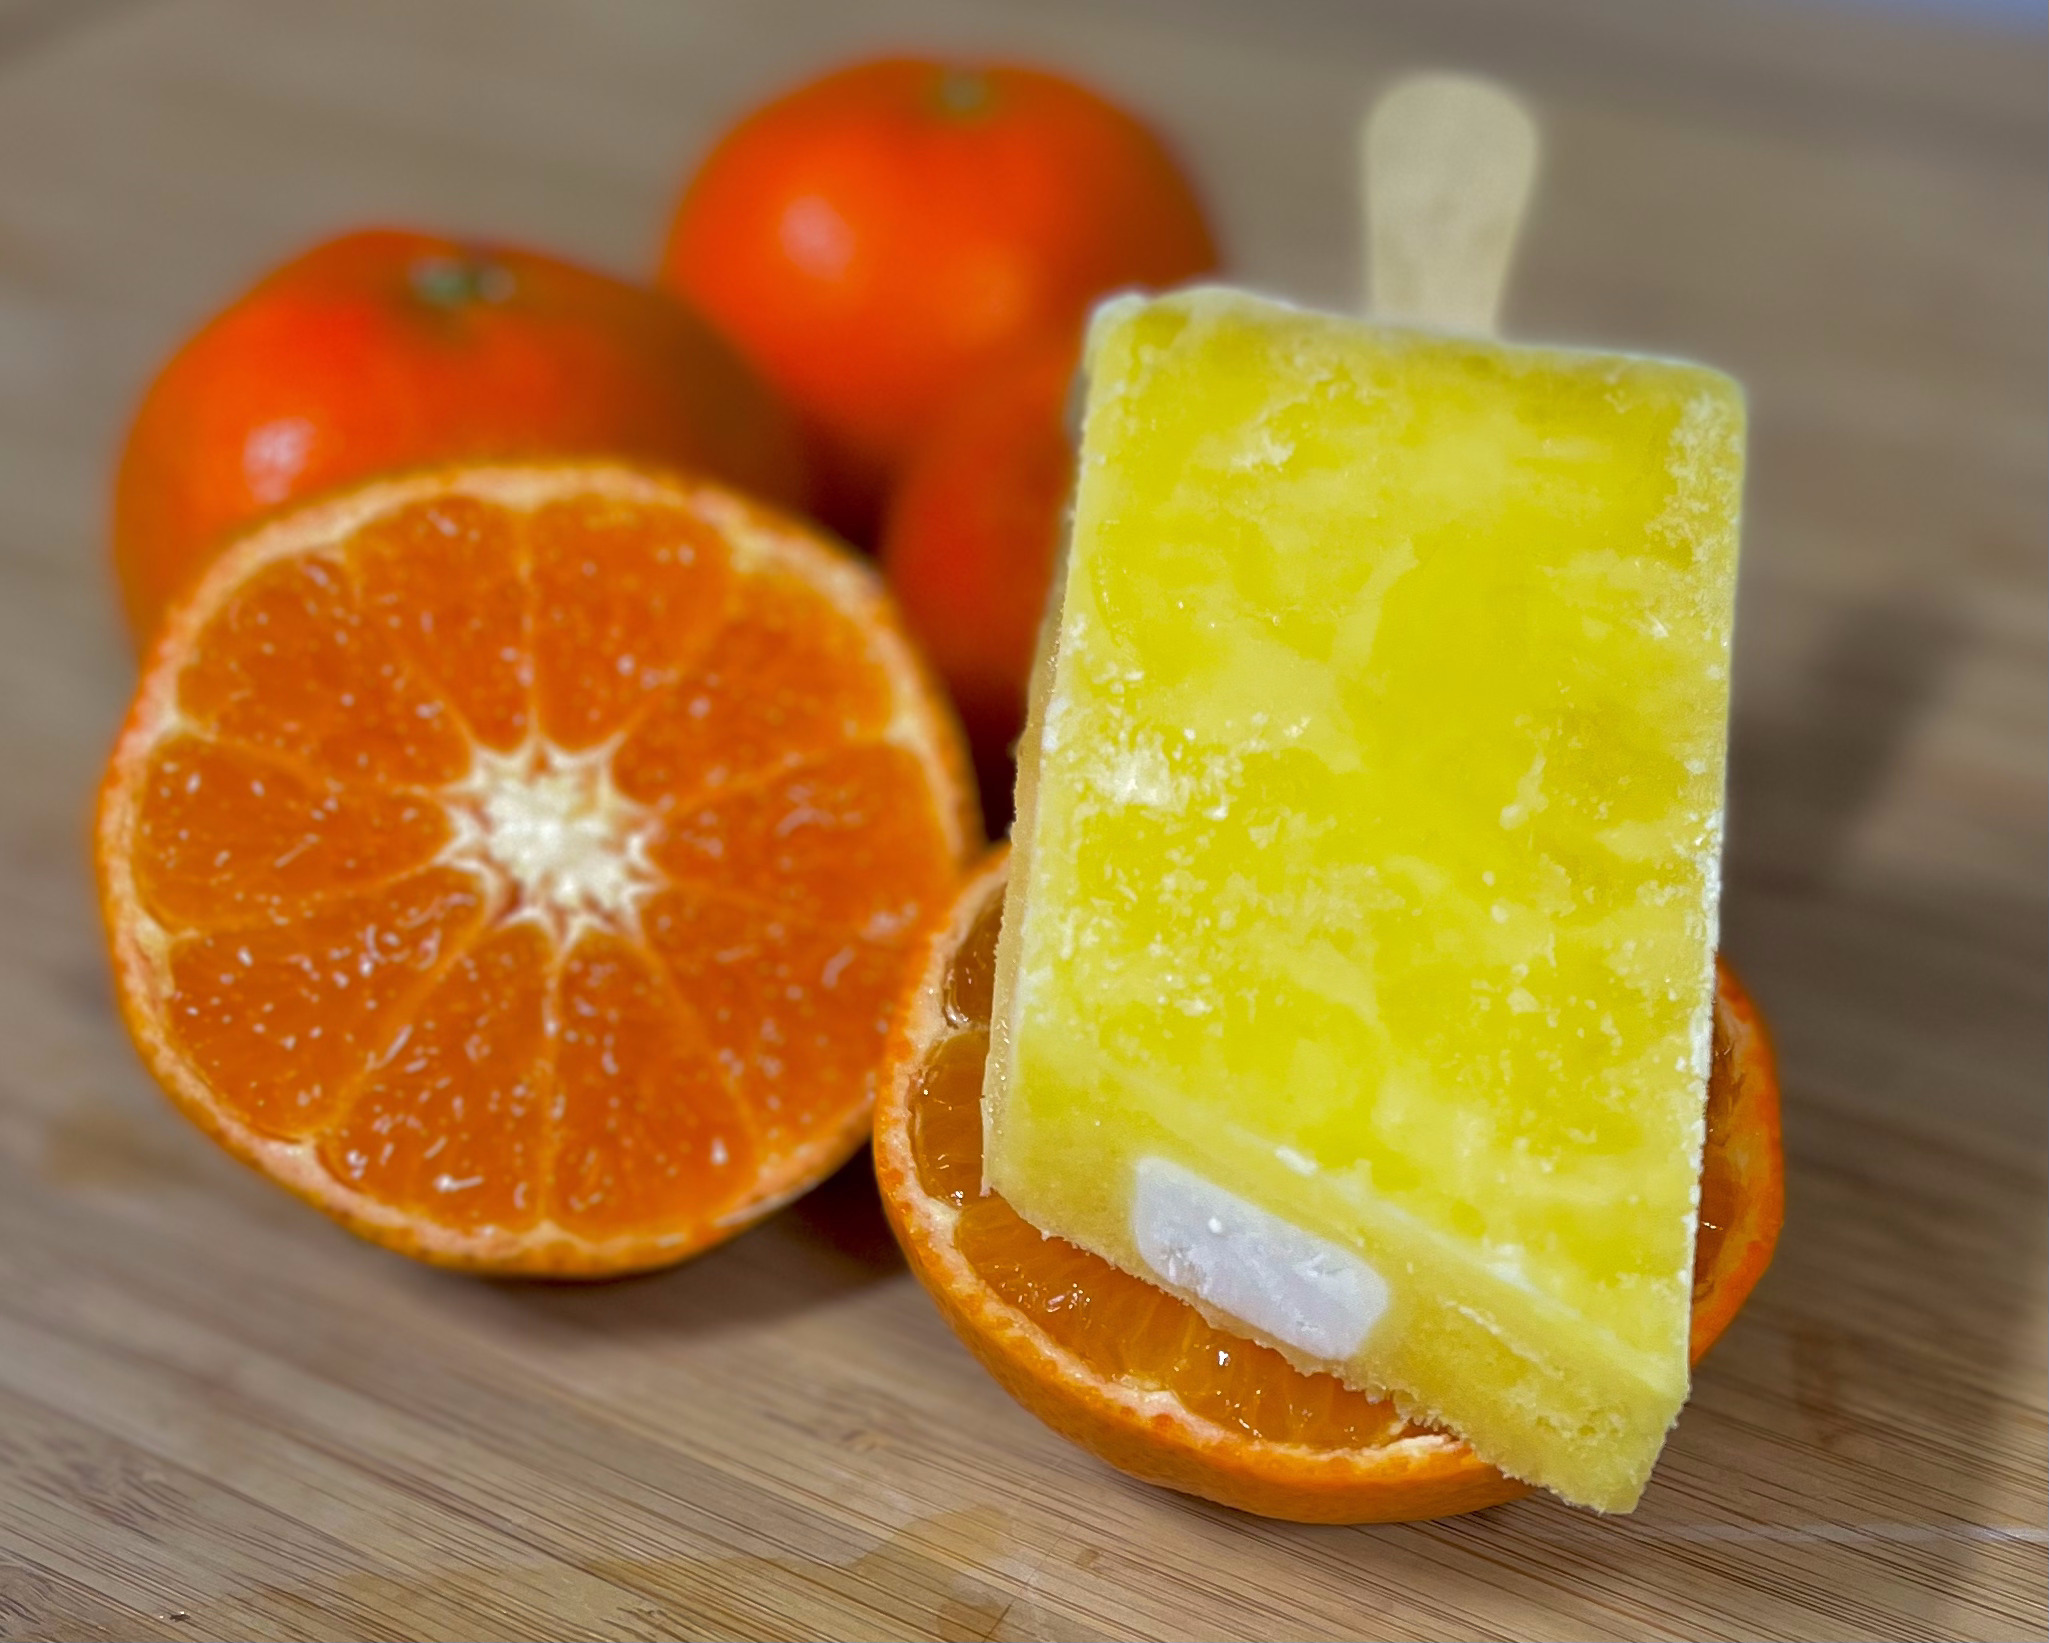 A shot of a frozen pop with oranges.